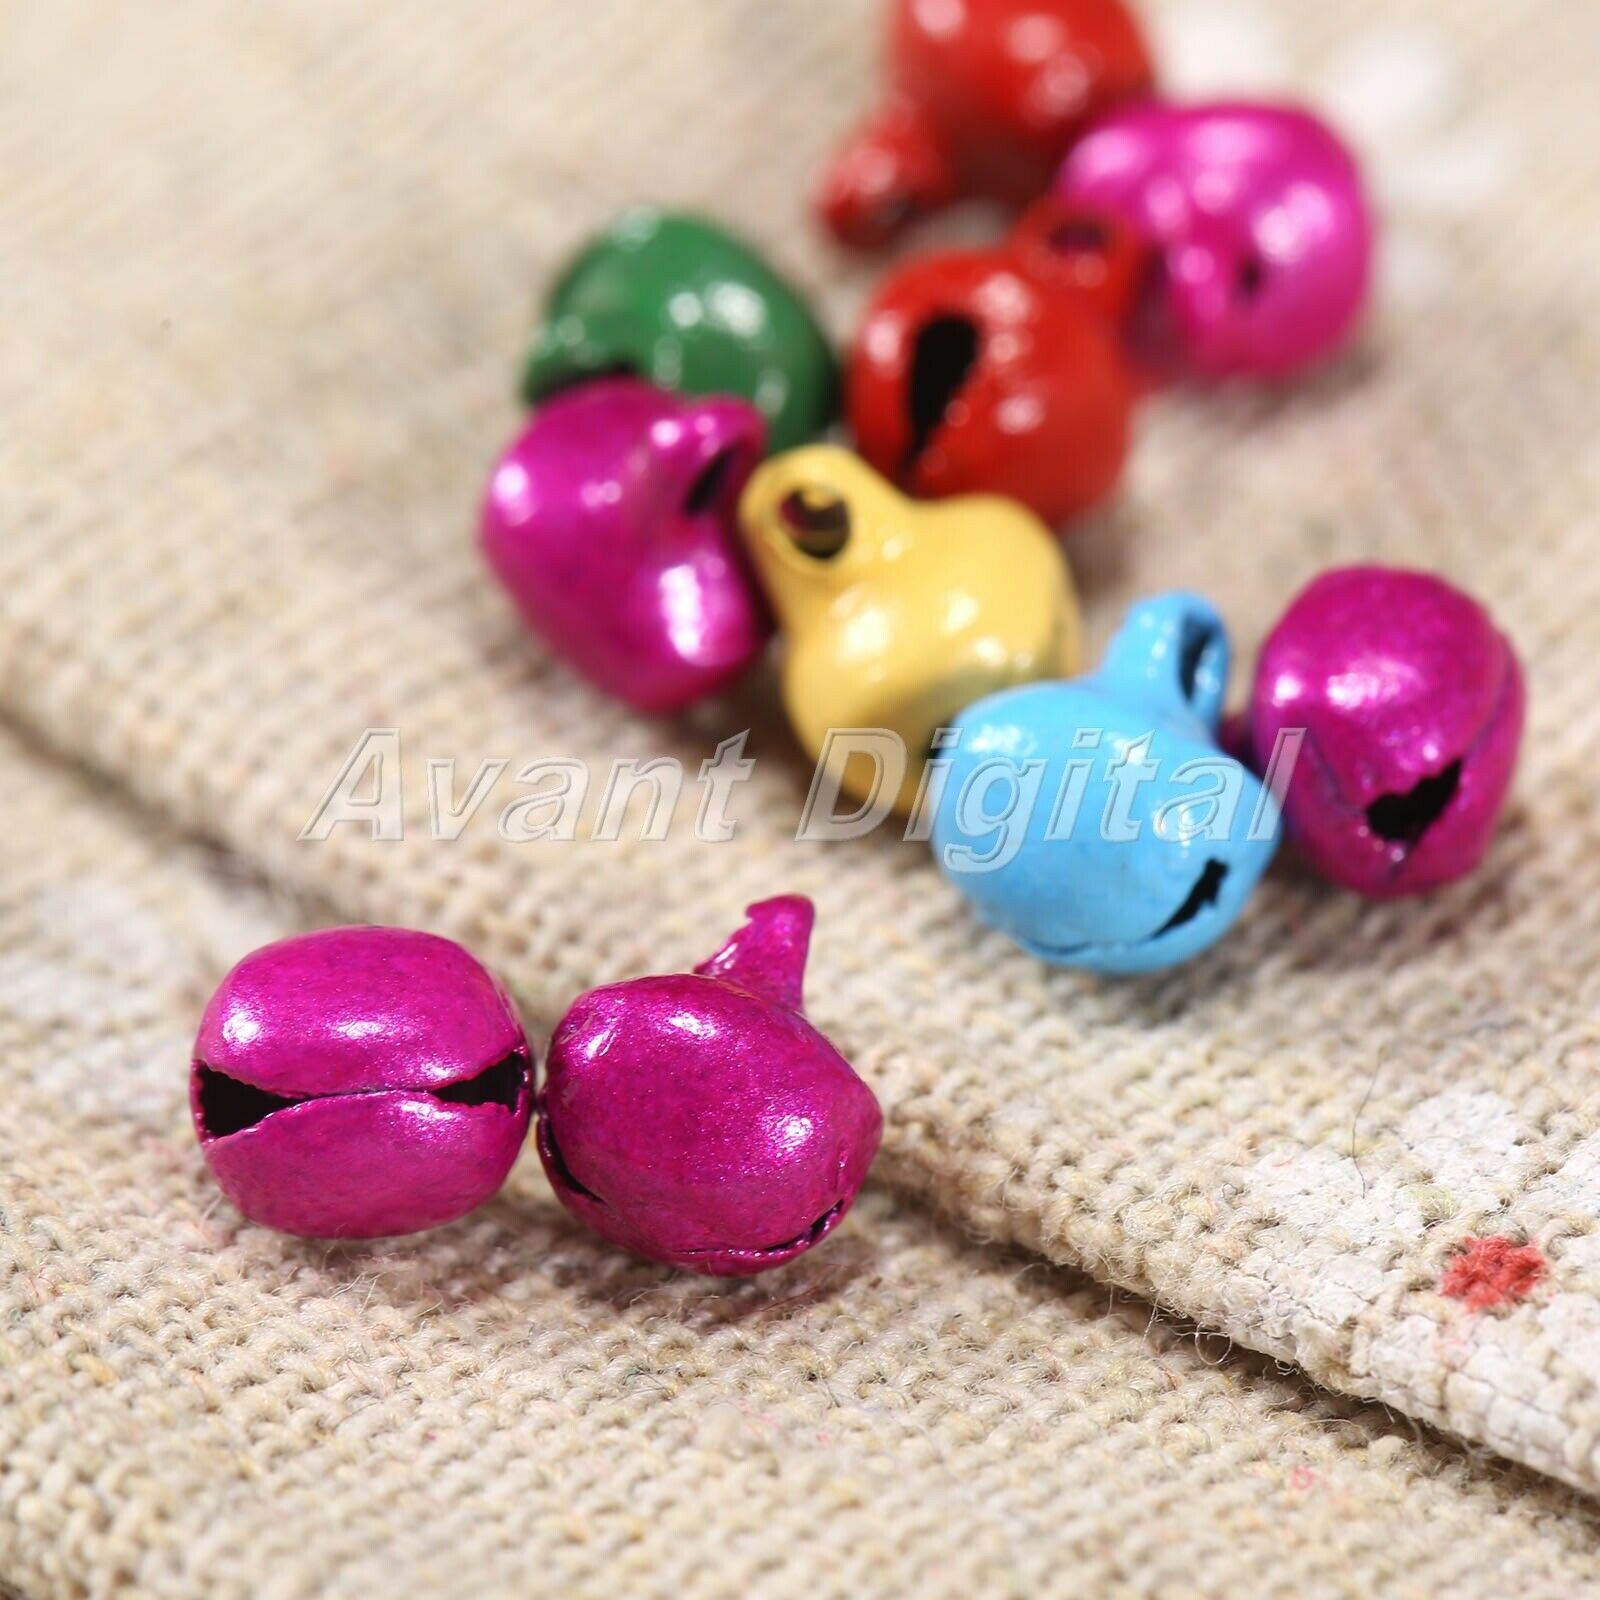 100 pcs Xmas Colorful Iron Beads Christmas Jingle Bells DIY Craft Jewelry 8x6 mm